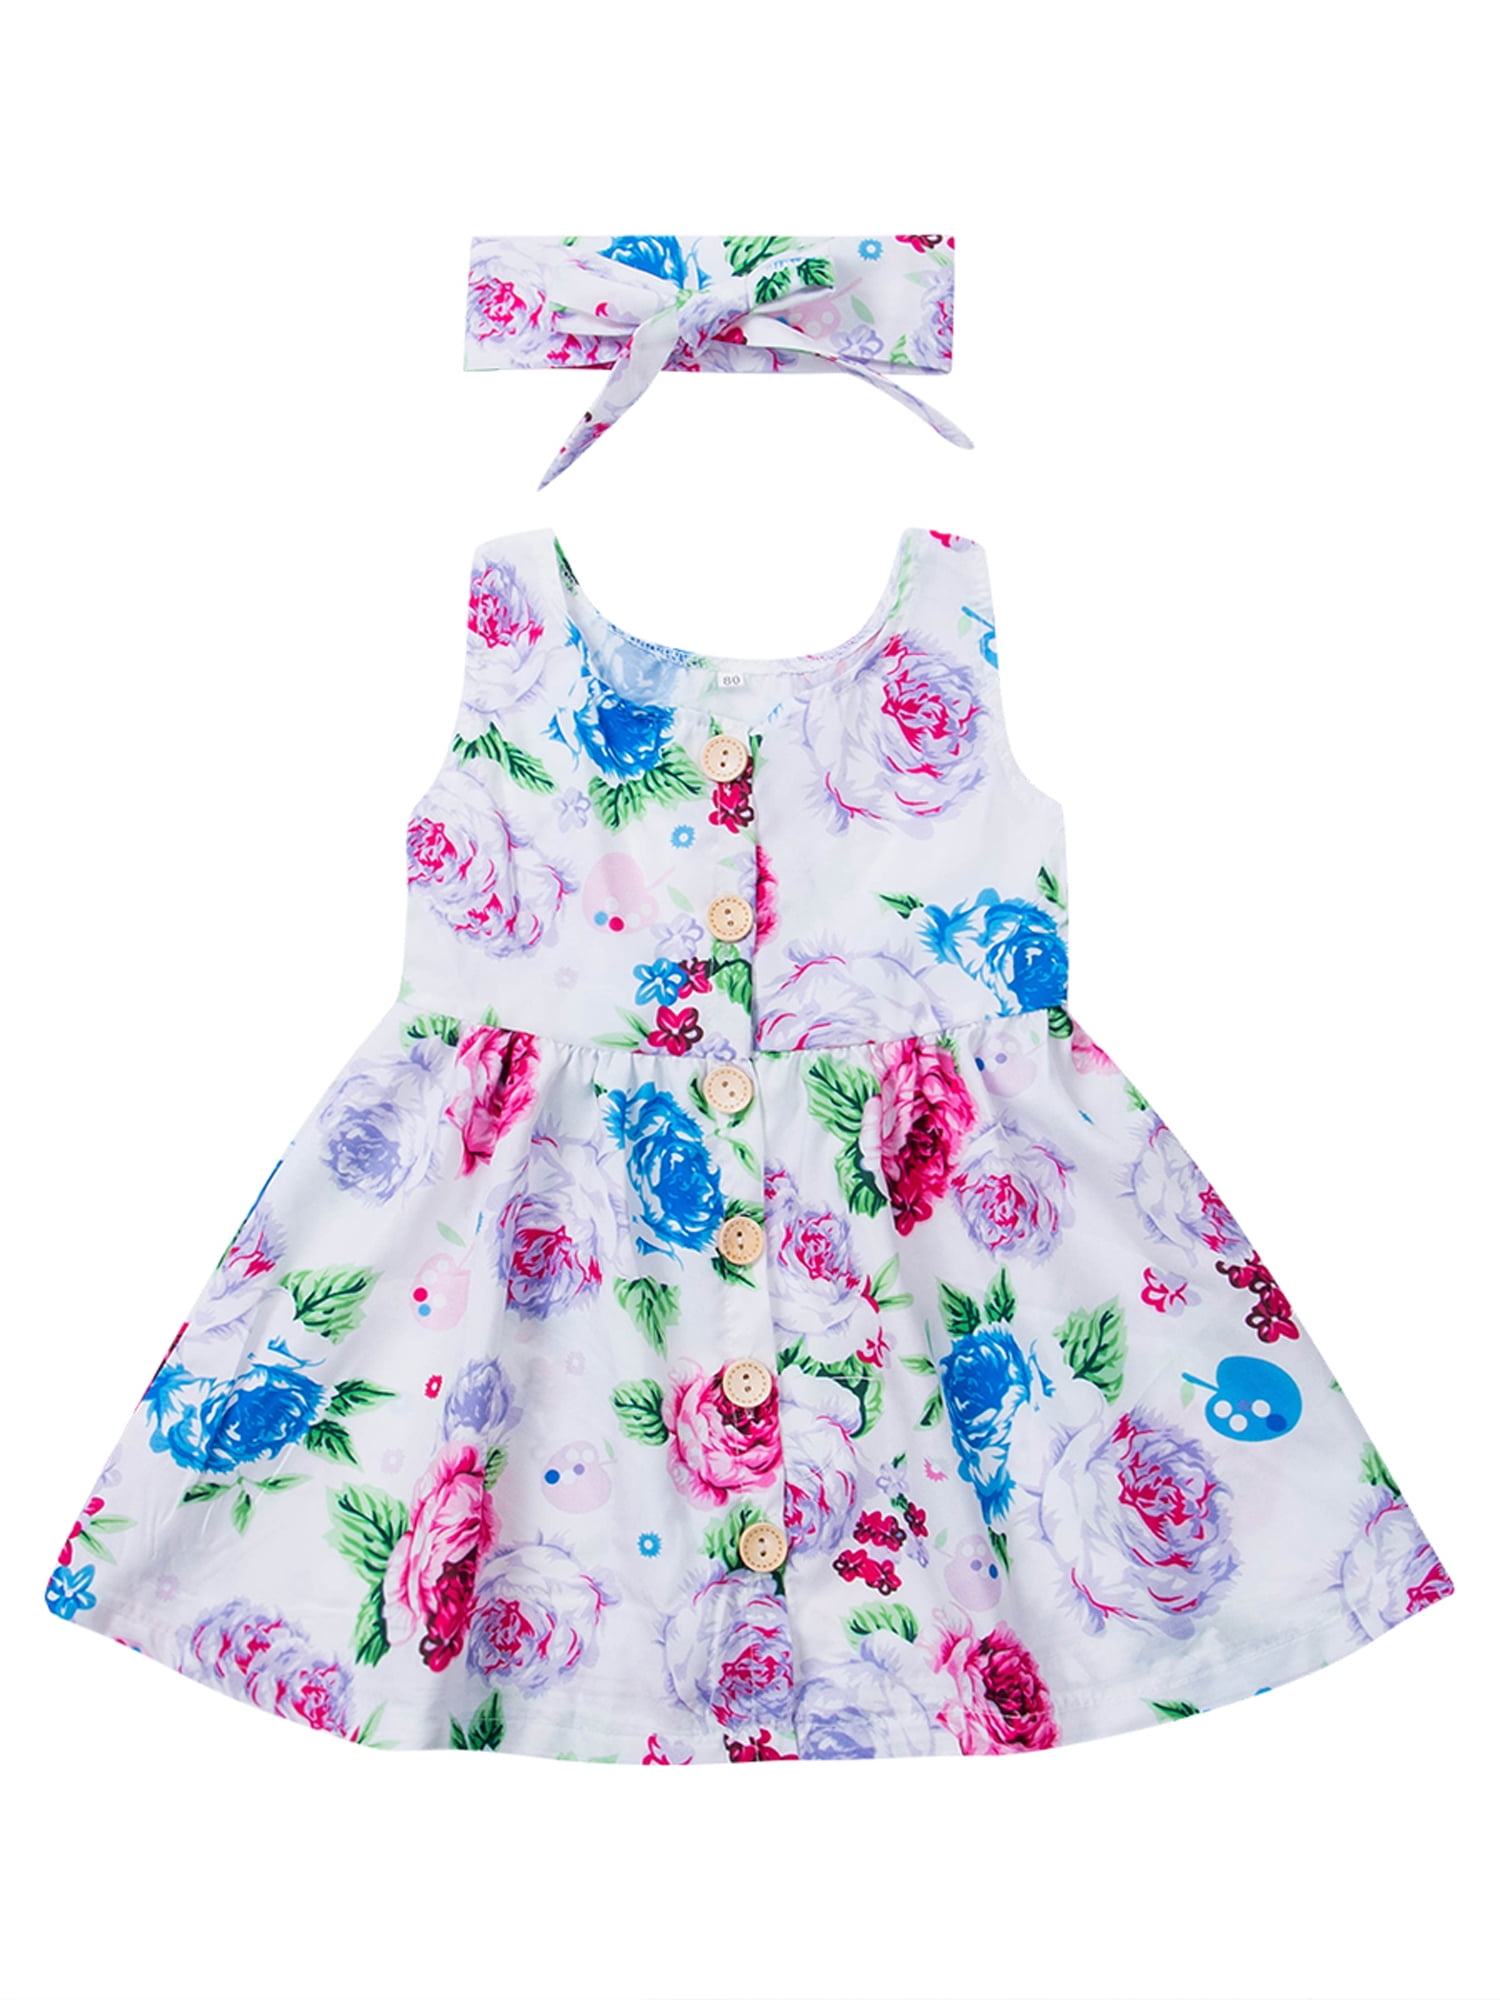 Toddler Baby Girl Summer Dress Cartoon Striped Printed Party Princess Dress E 